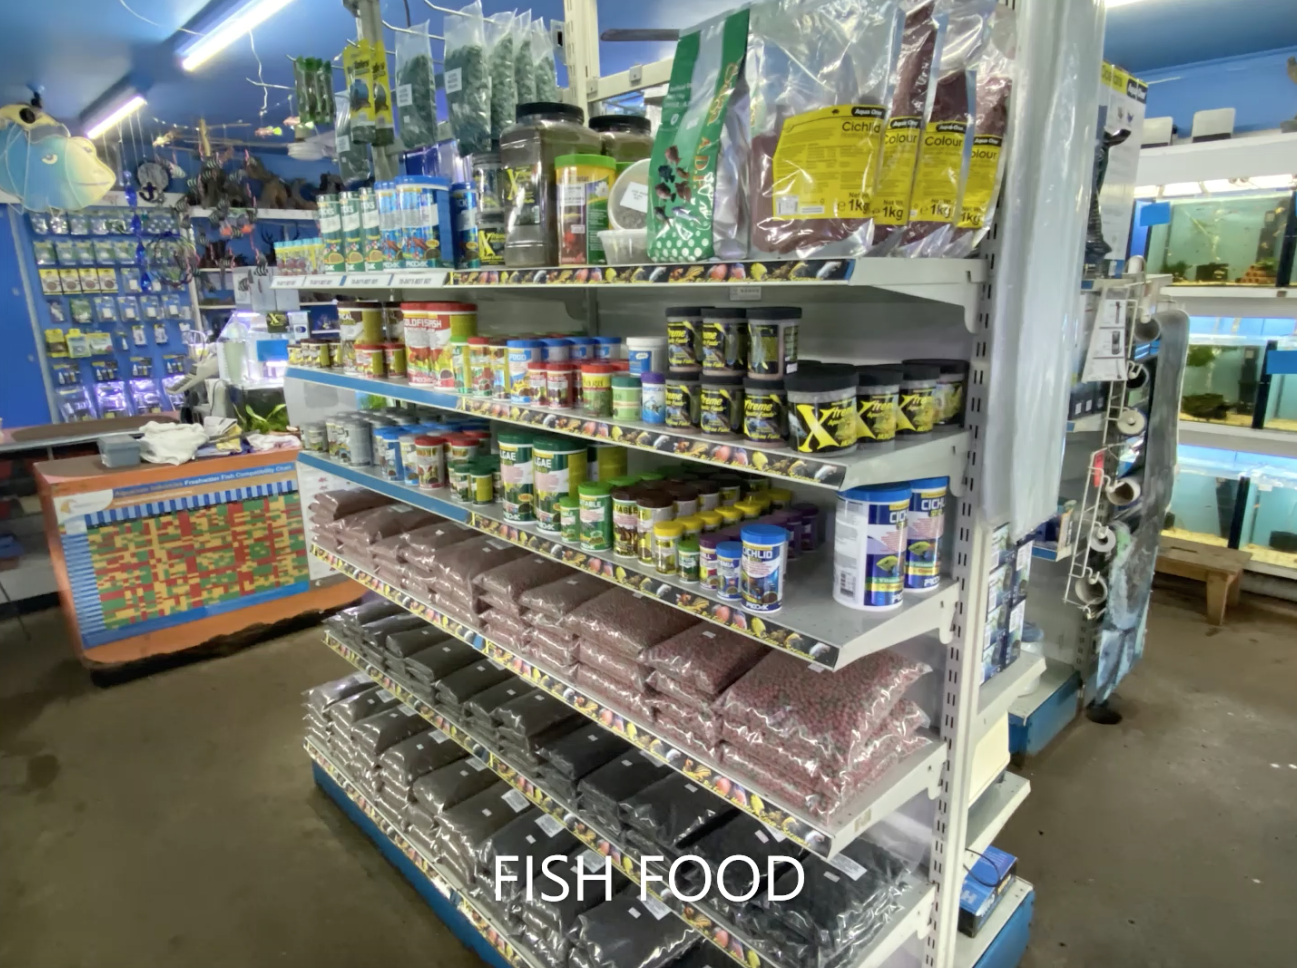 Fish Food on Display in Pet Store — Summerland Aquarium in Wollongbar, NSW